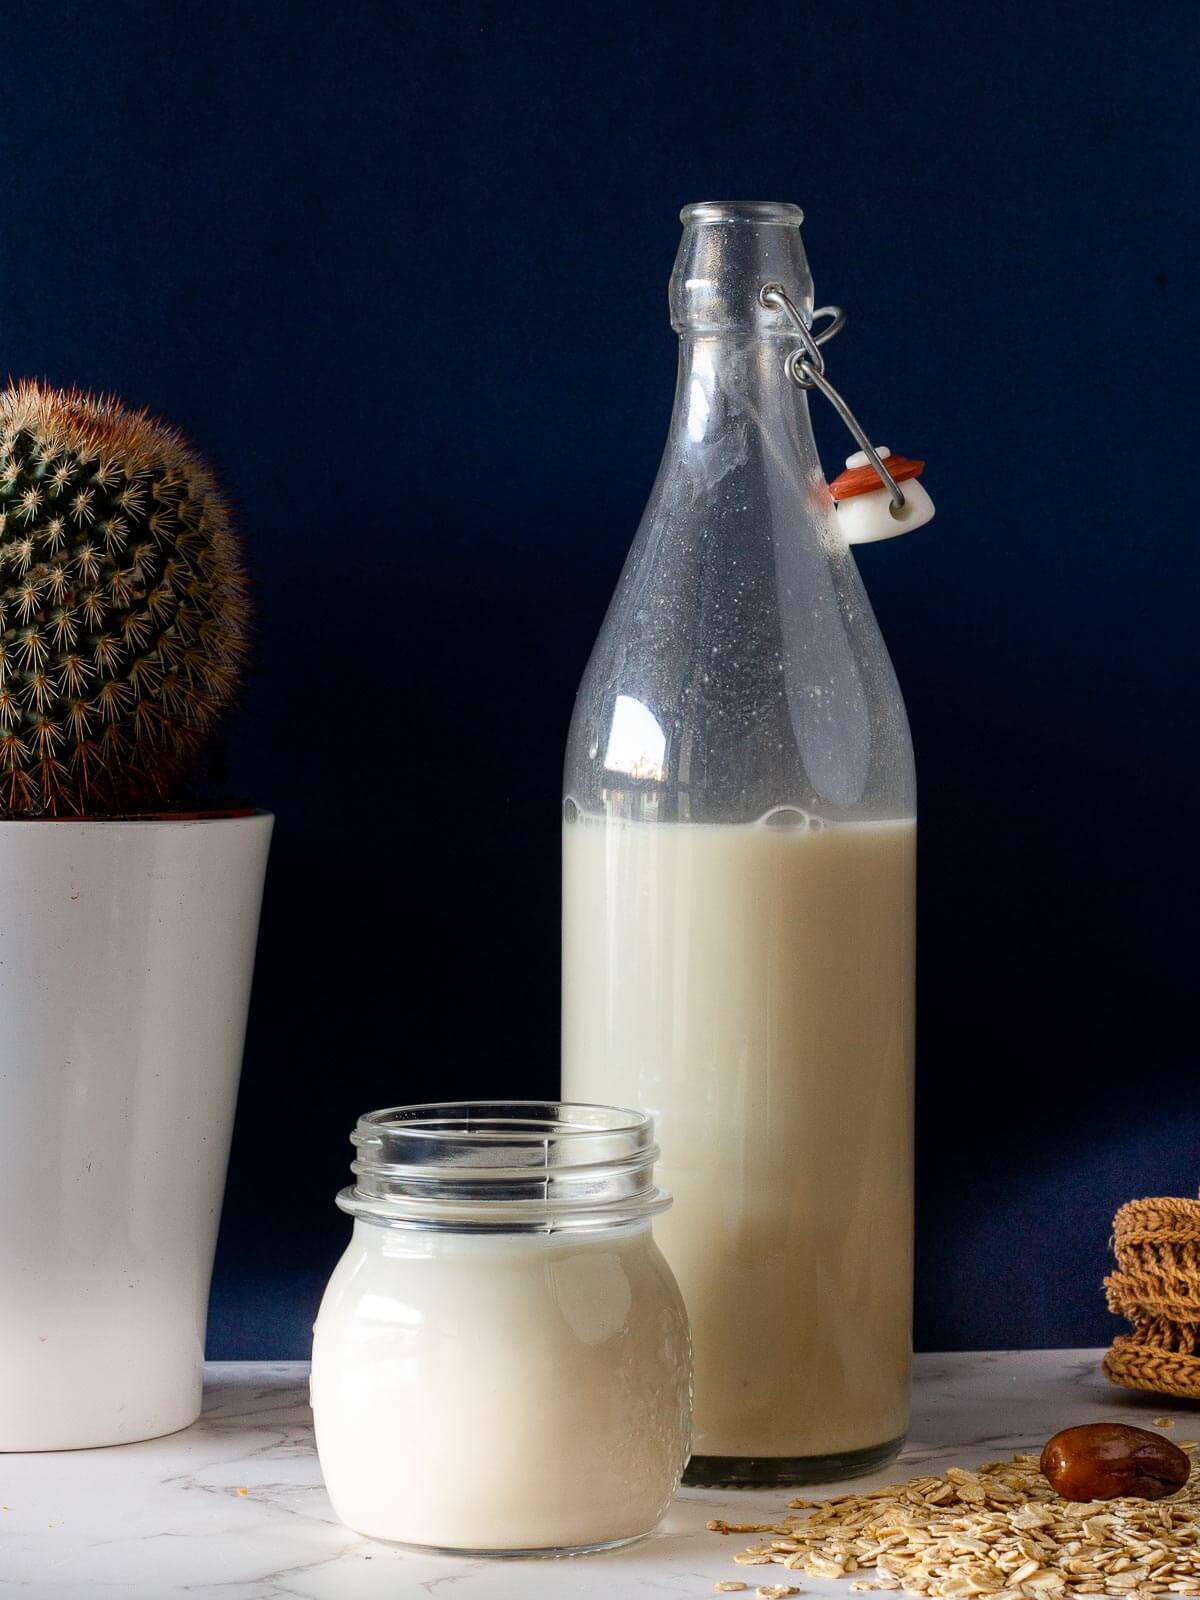 oat milk bottle and glass